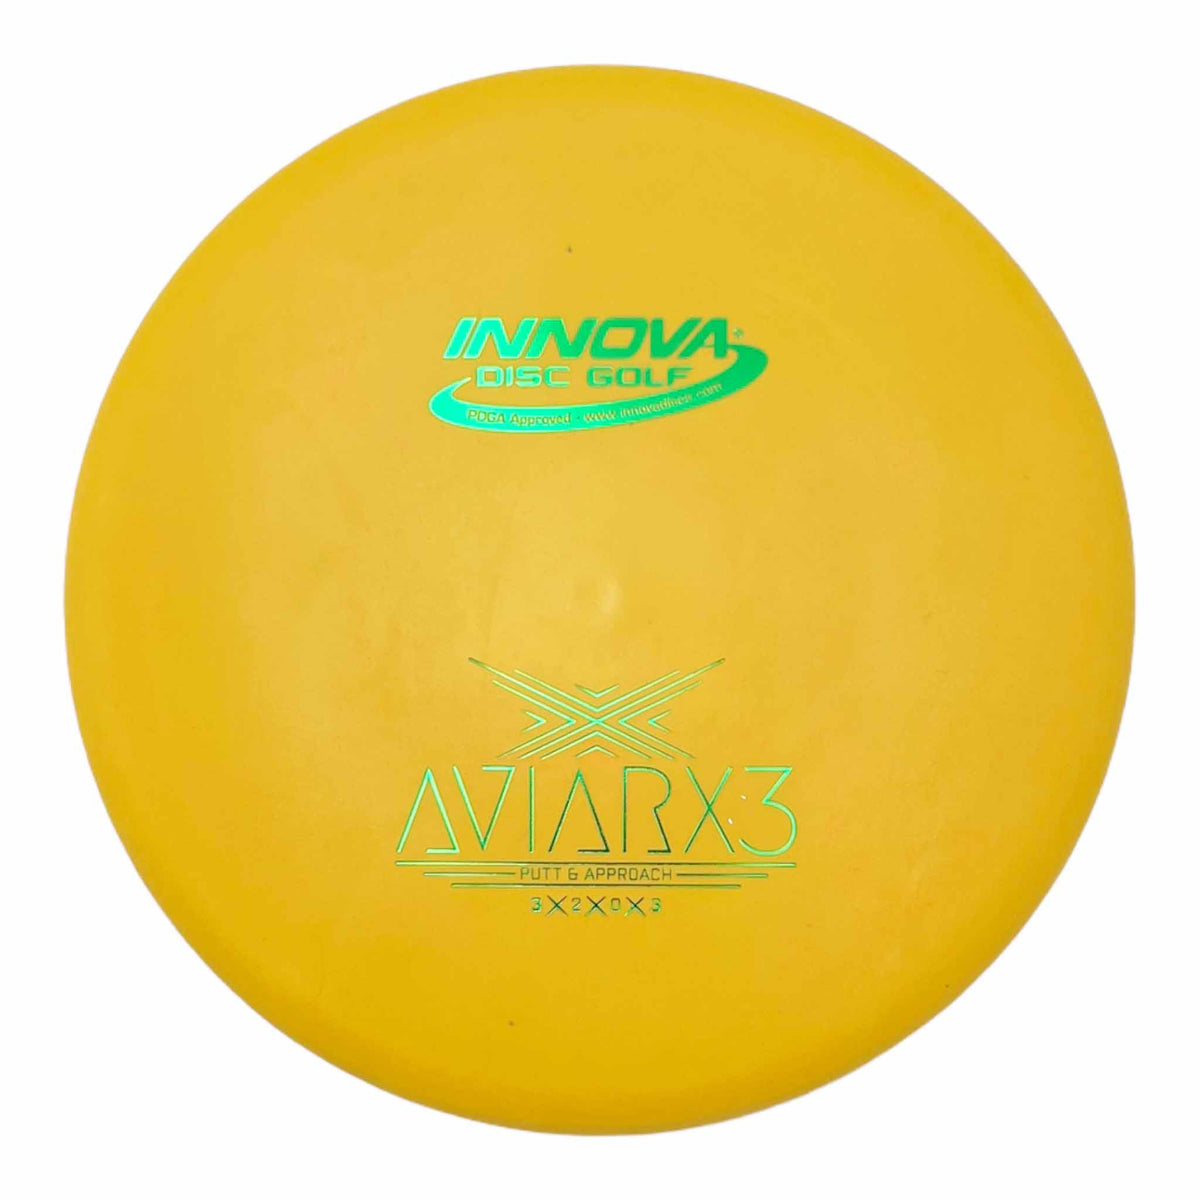 Innova Disc Golf DX AviarX3 putter and approach - Yellow